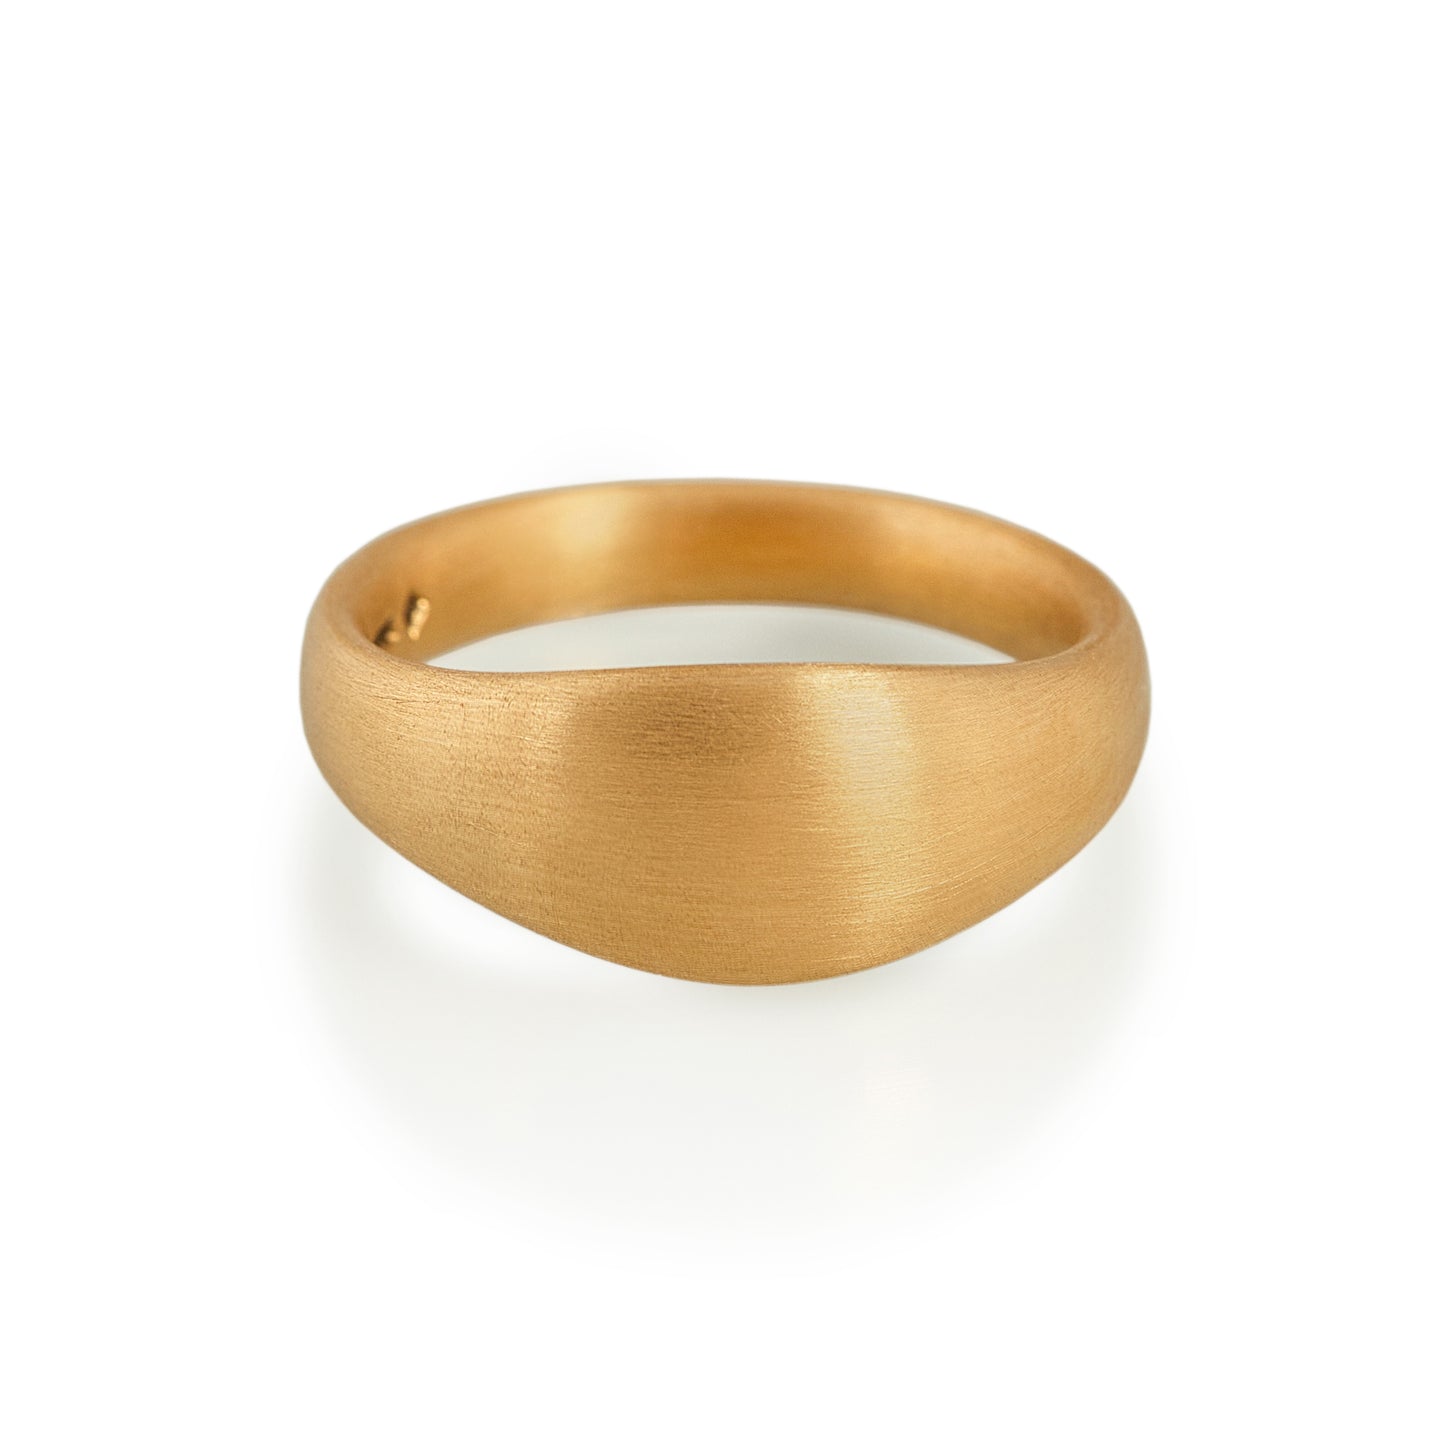 Elliptical Ring, 22ct Gold